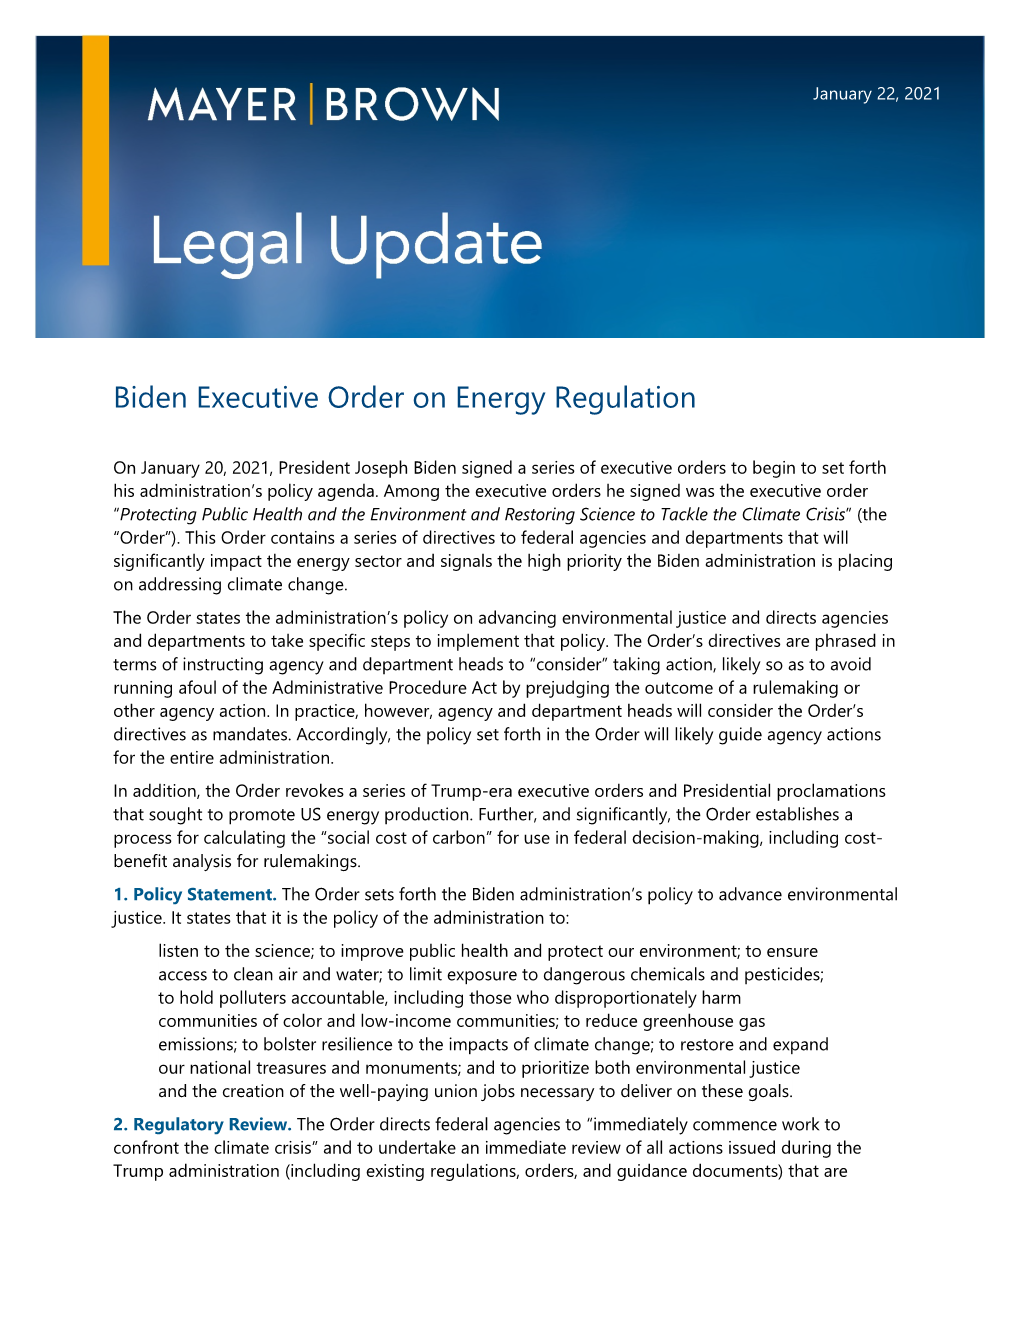 Biden Executive Order on Energy Regulation